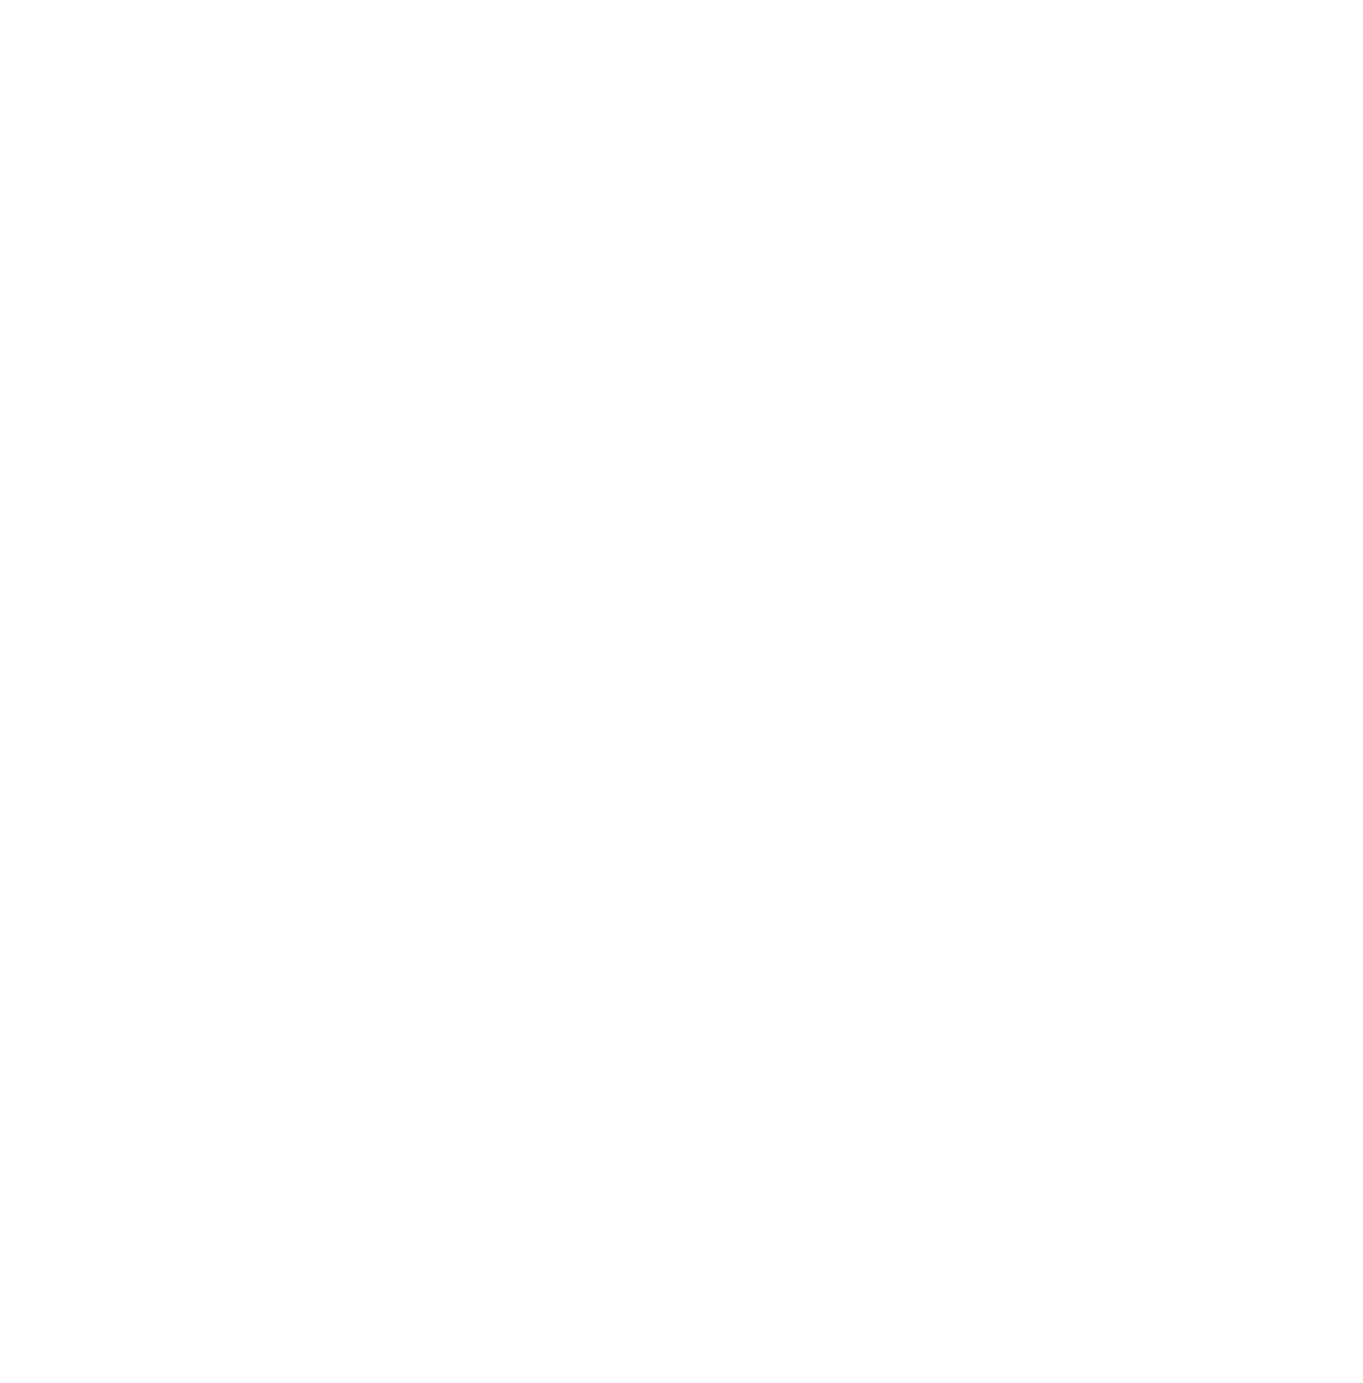 GCC_logo